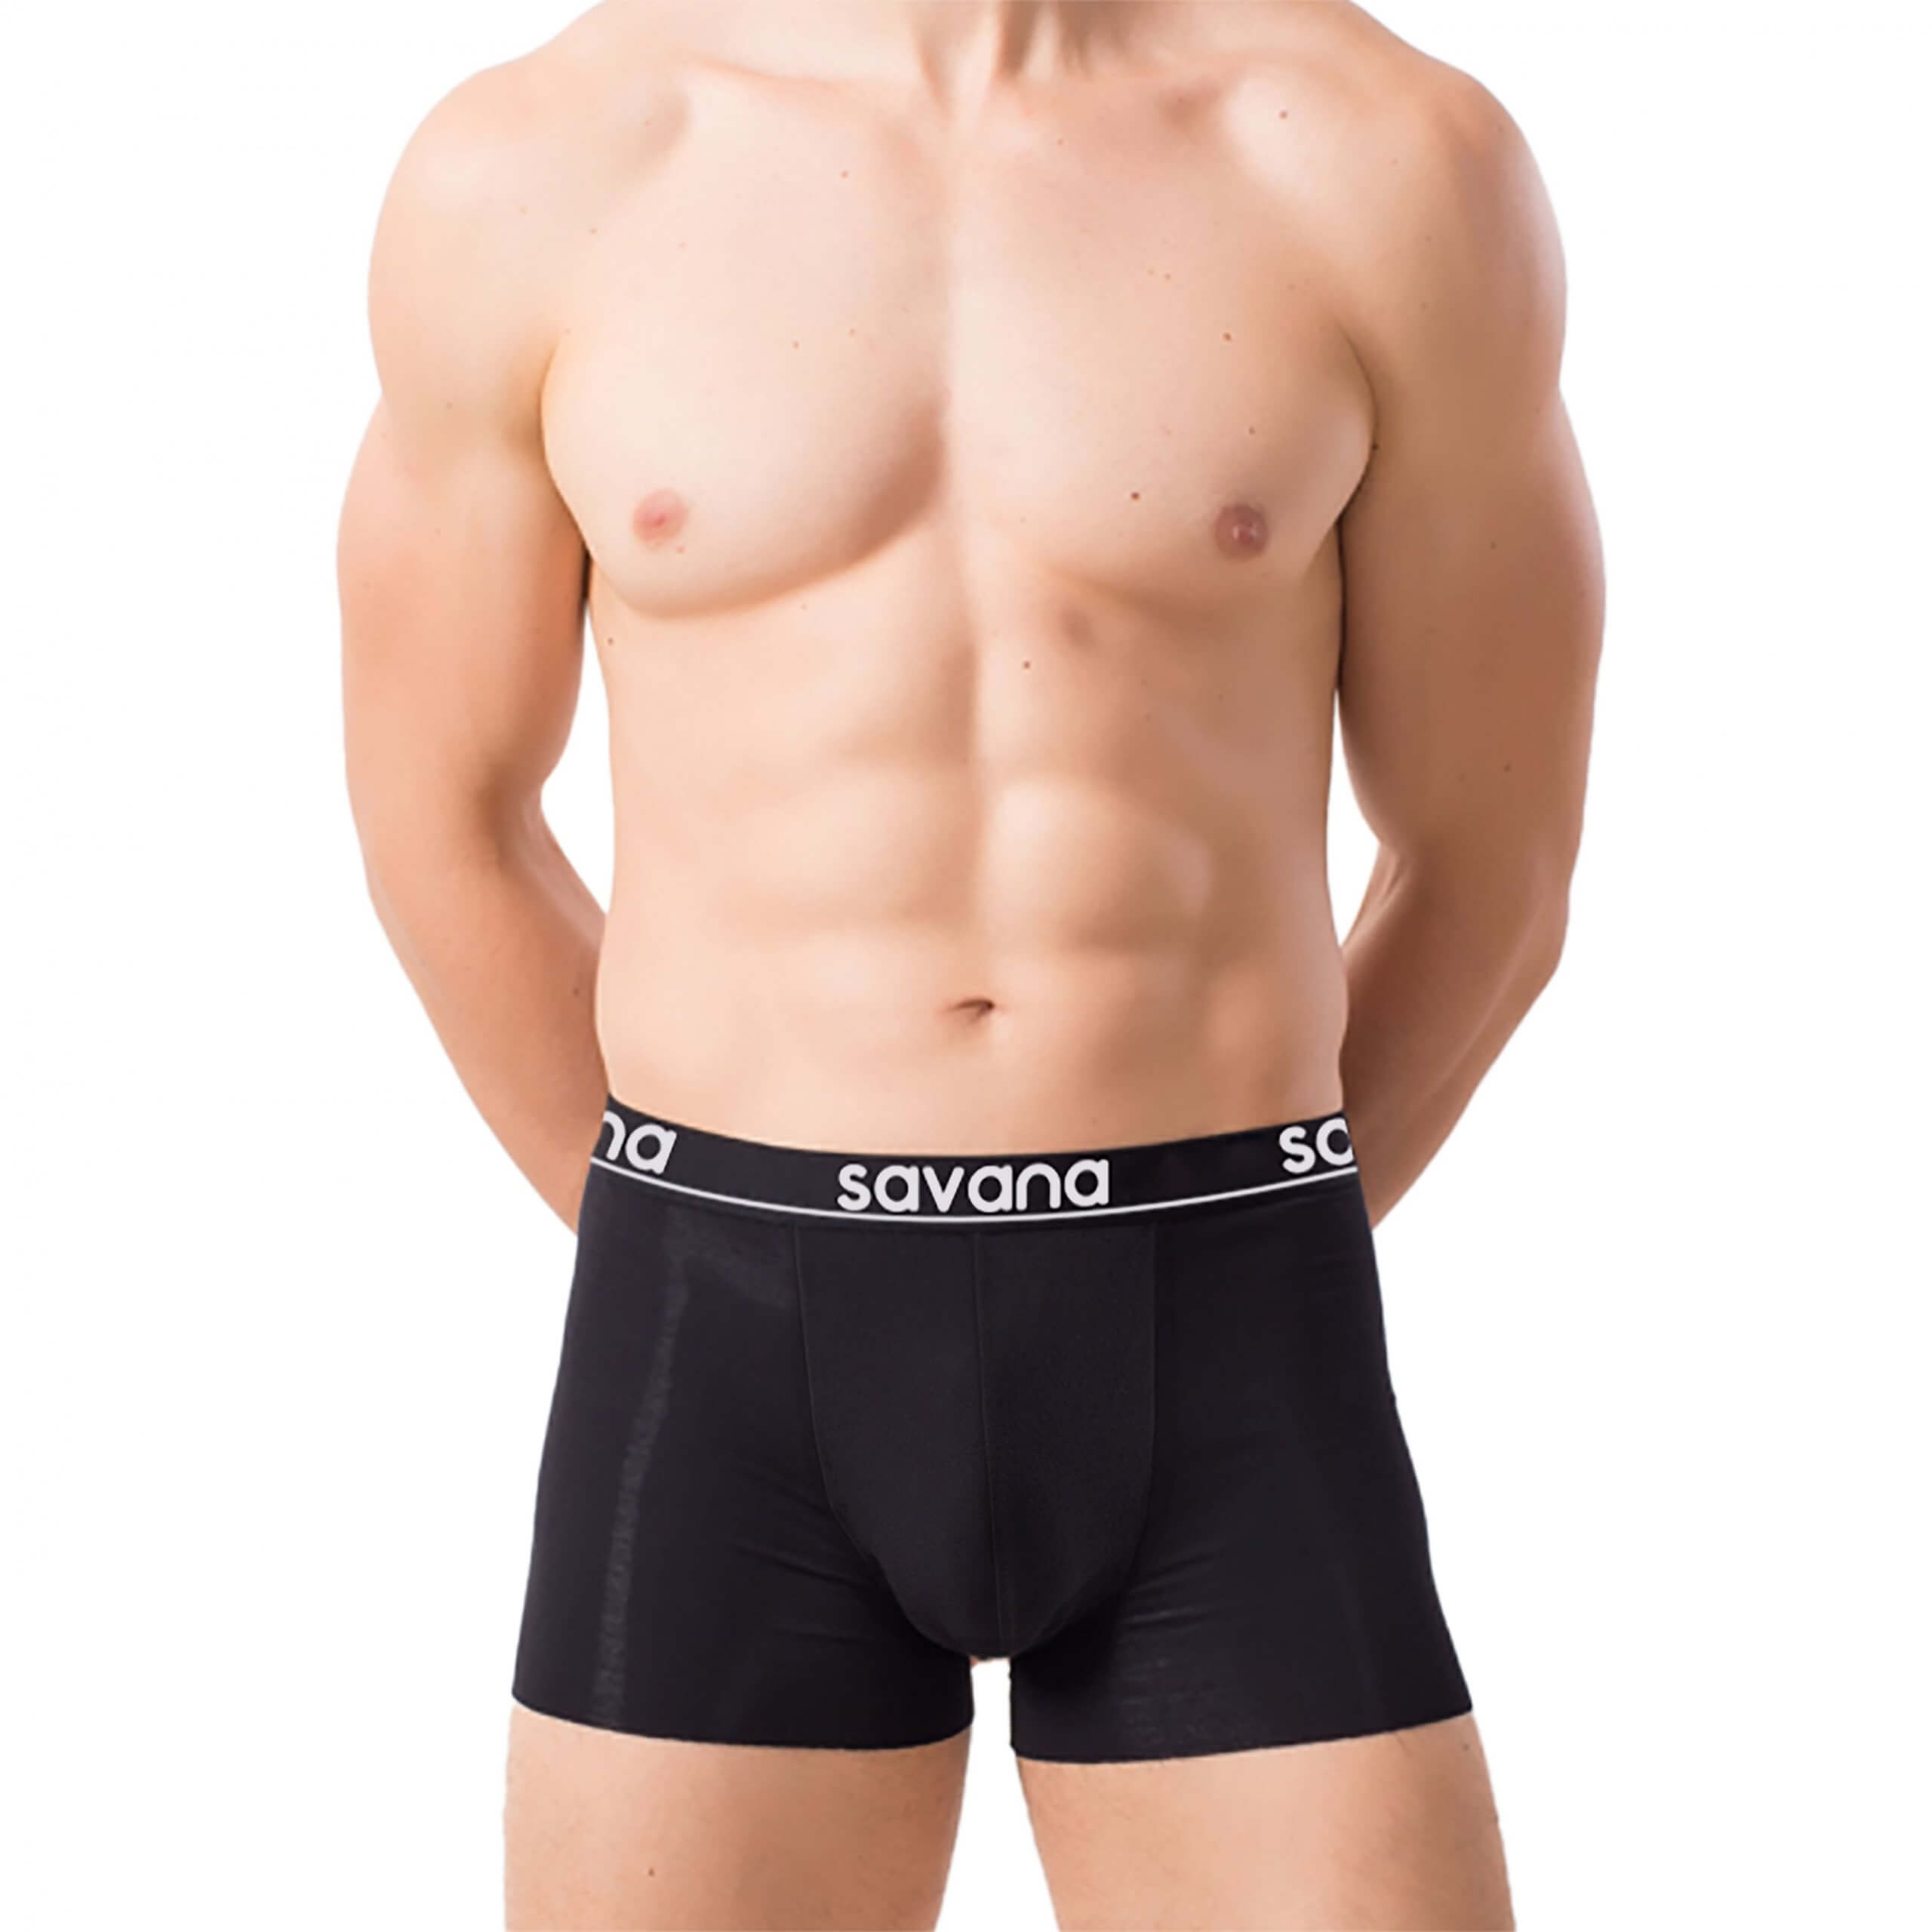 savana-m02-underwear-front-whitebg-nuovo-2-6x-titolo